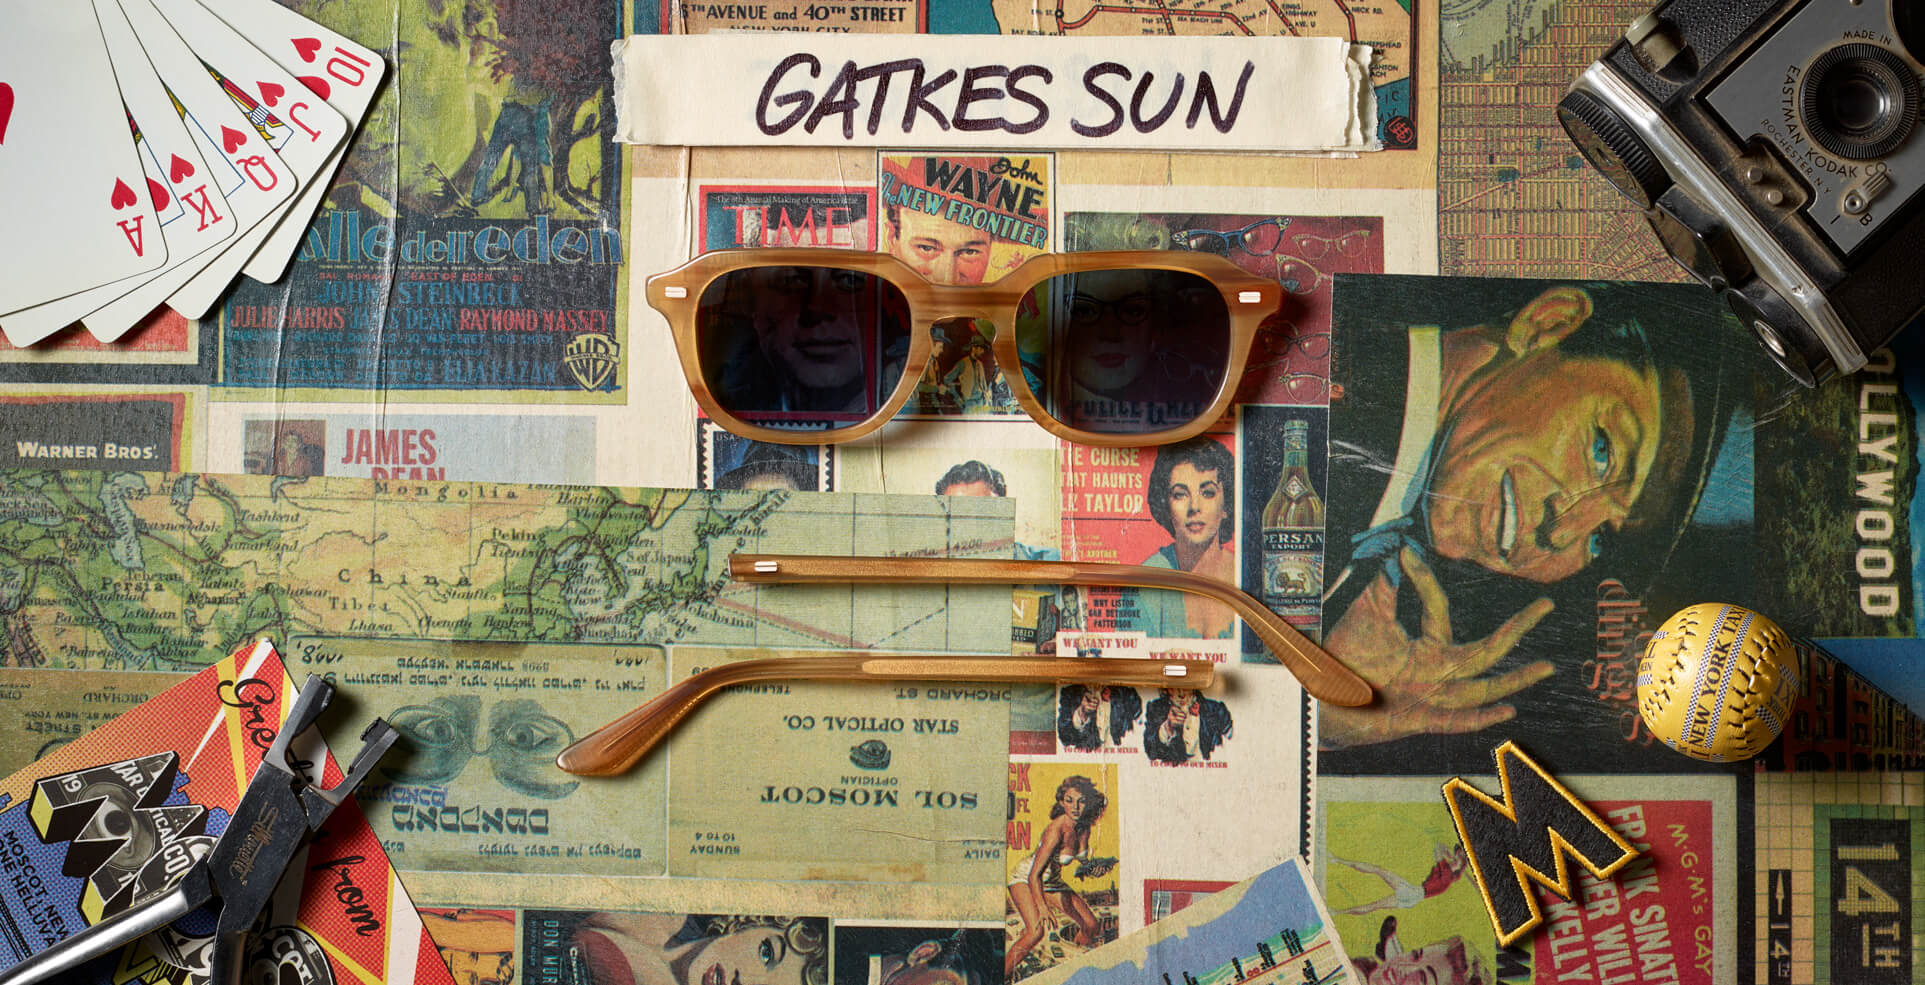 The GATKES SUN